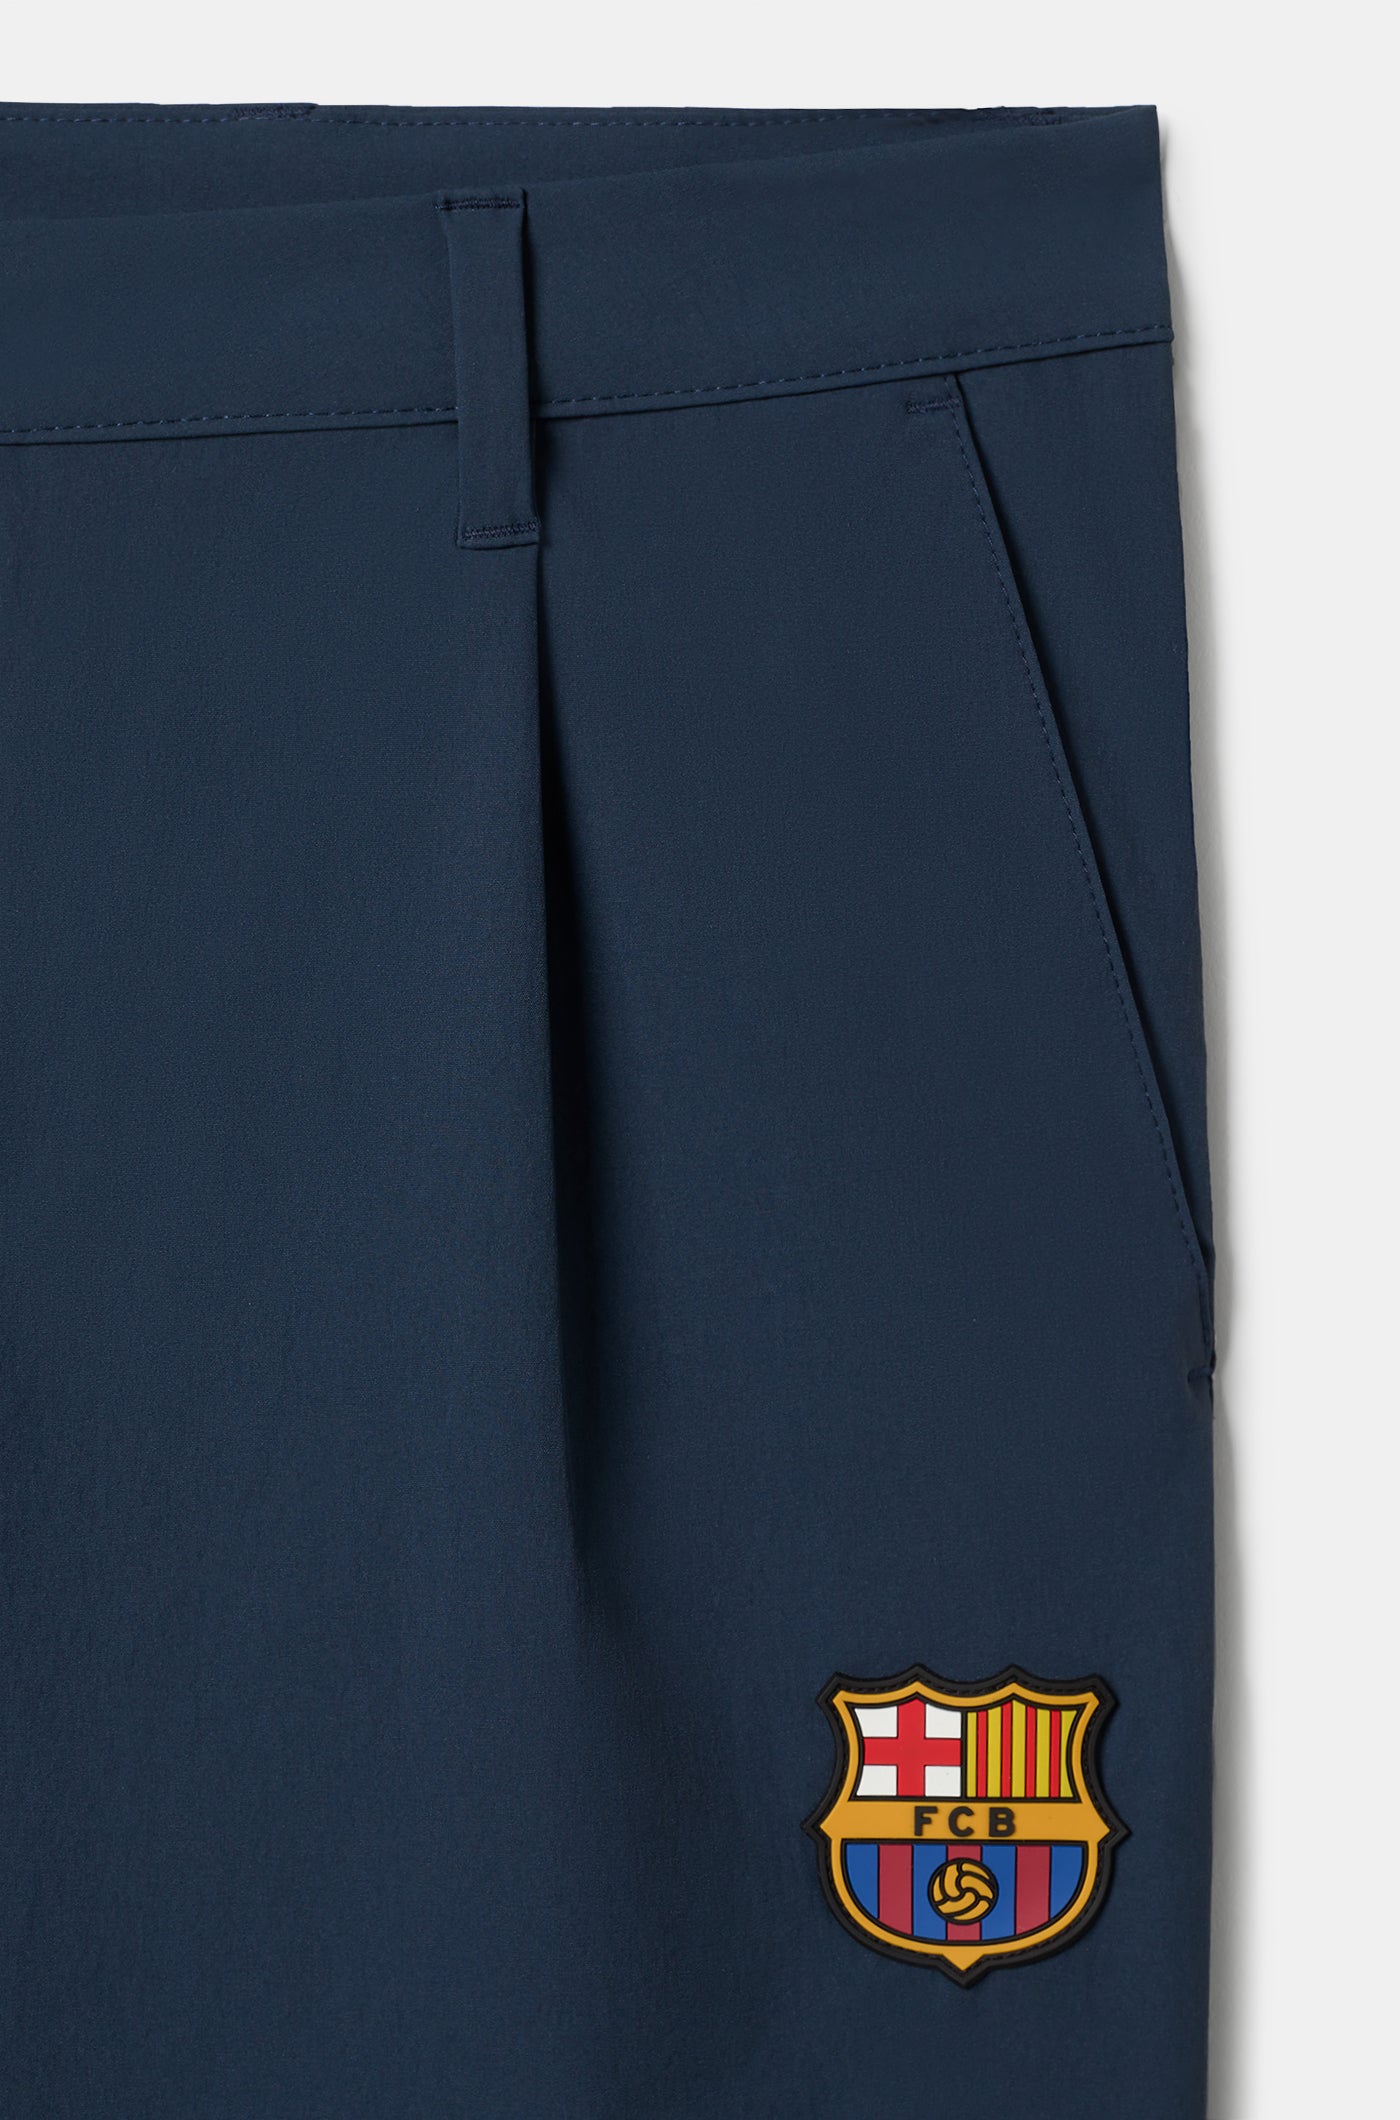 Pantalons blau marí del Barça